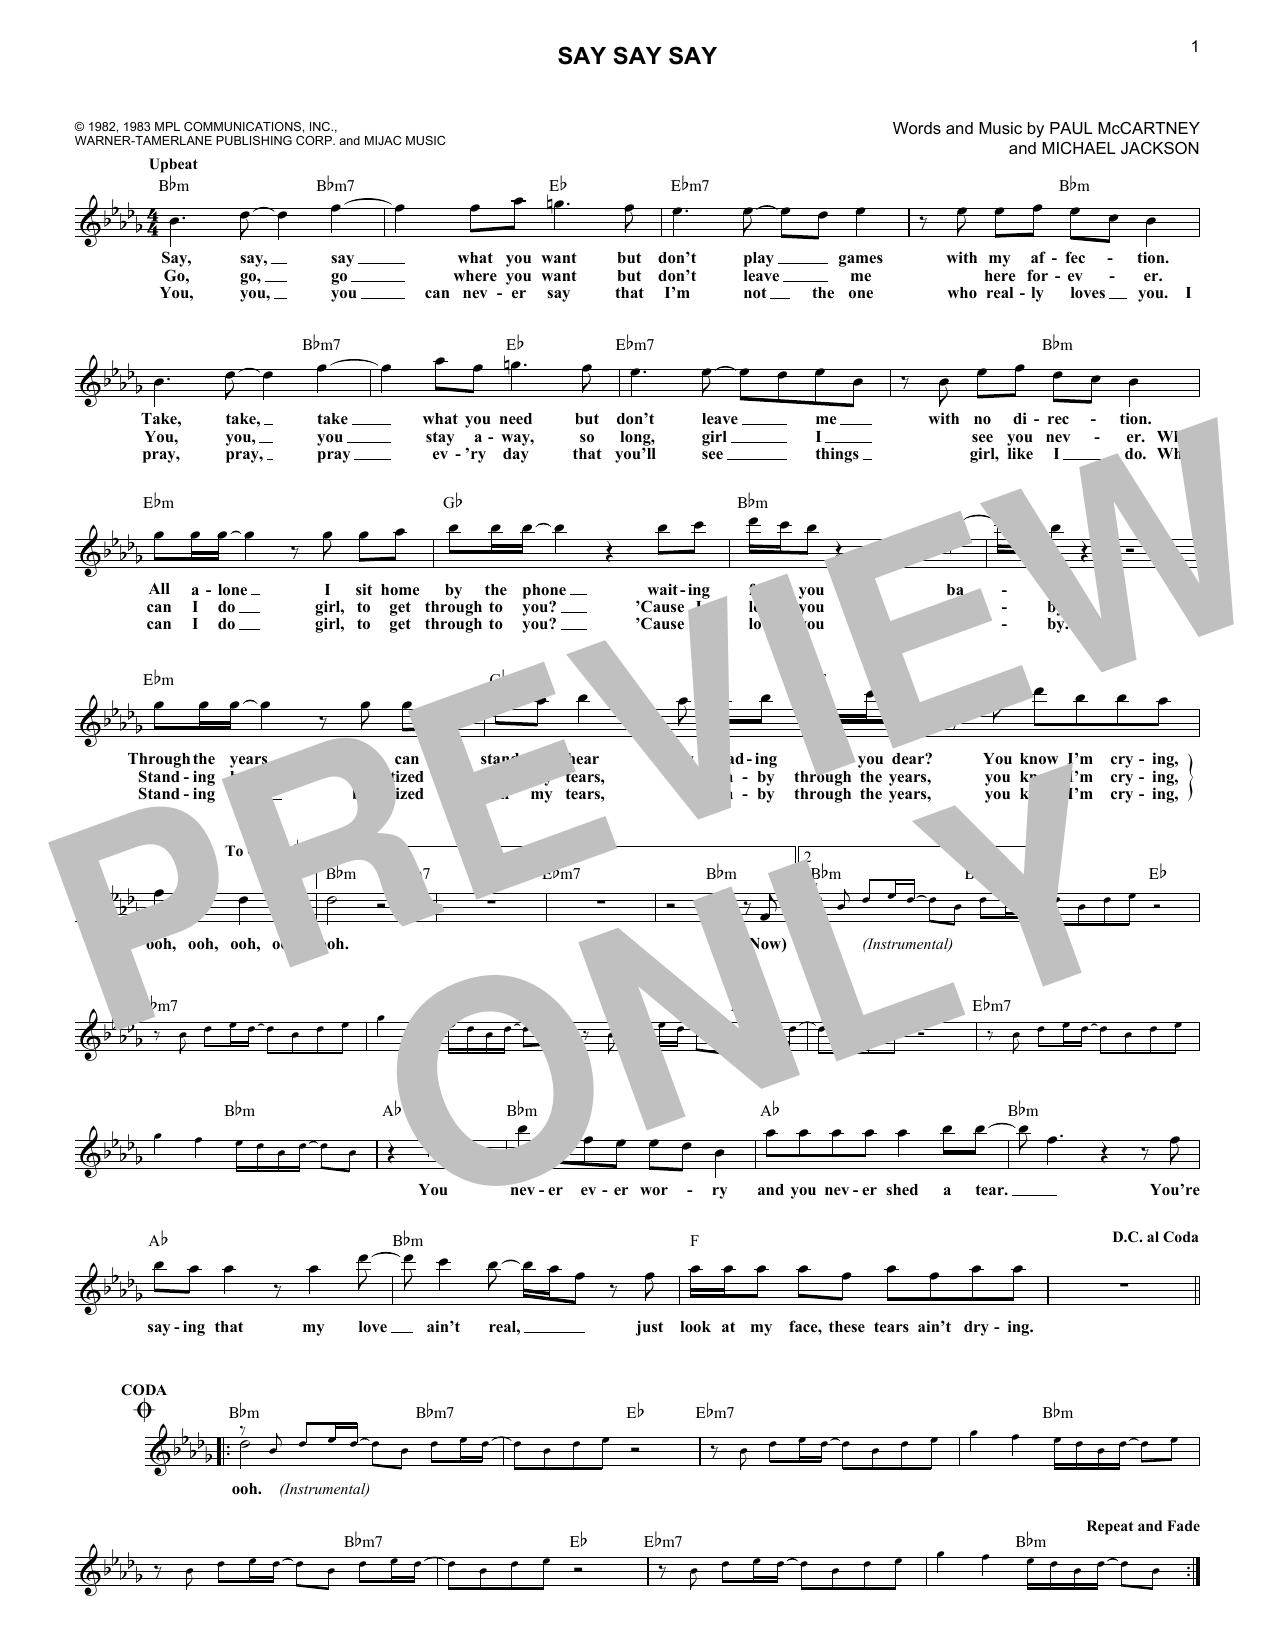 Paul McCartney & Michael Jackson Say Say Say Sheet Music Notes & Chords for Lyrics & Chords - Download or Print PDF